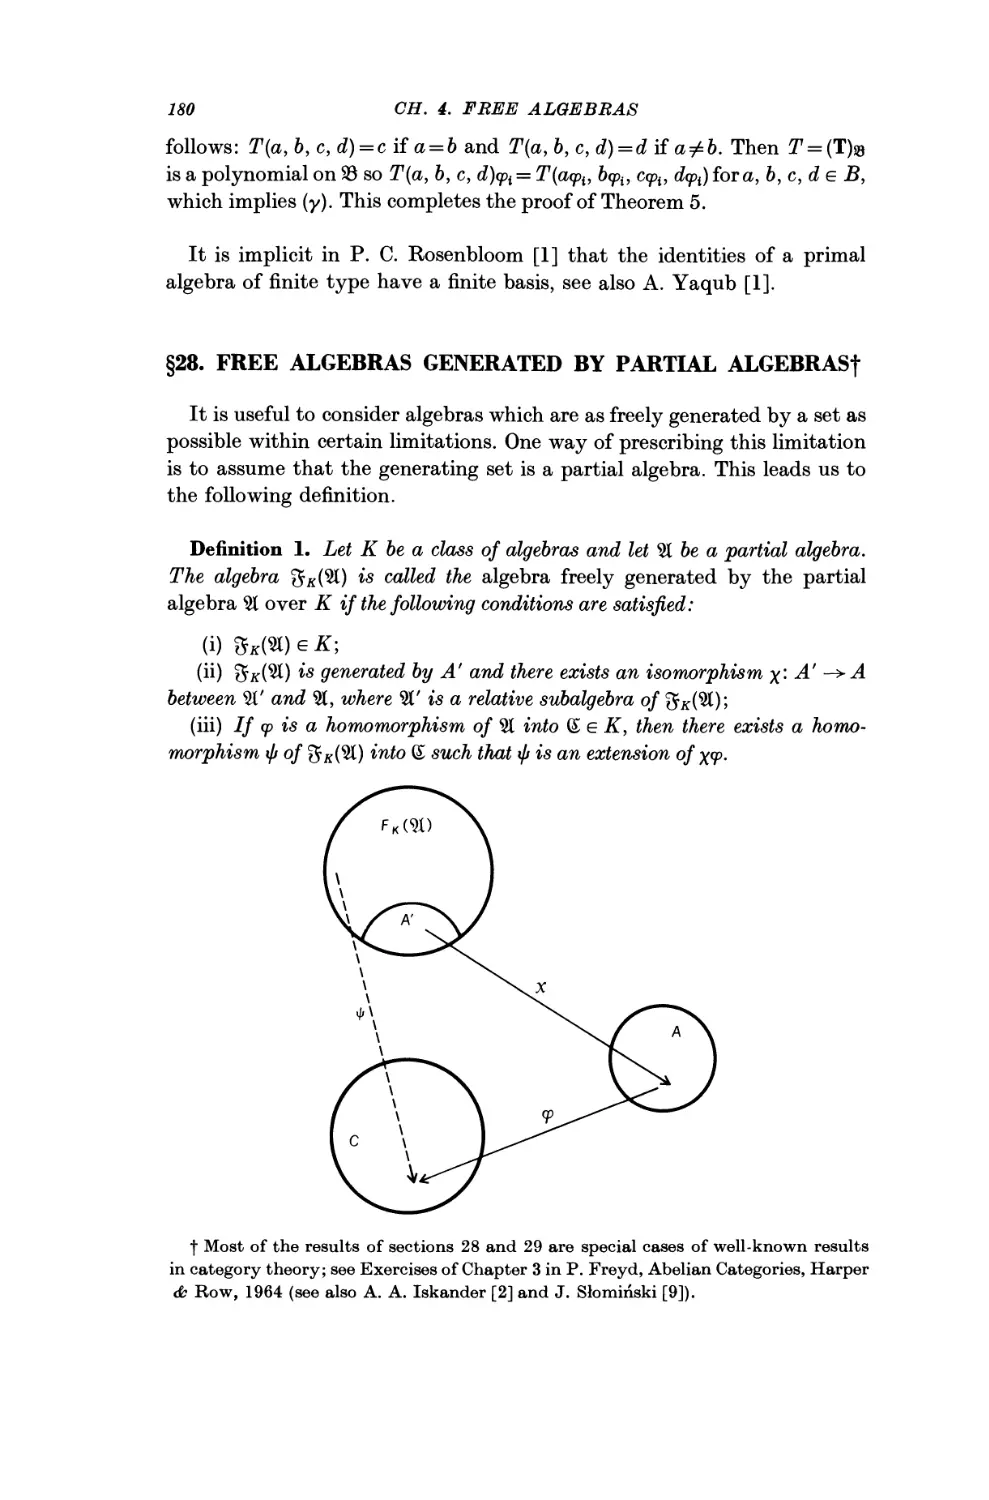 §28. Free Algebras Generated by Partial Algebras